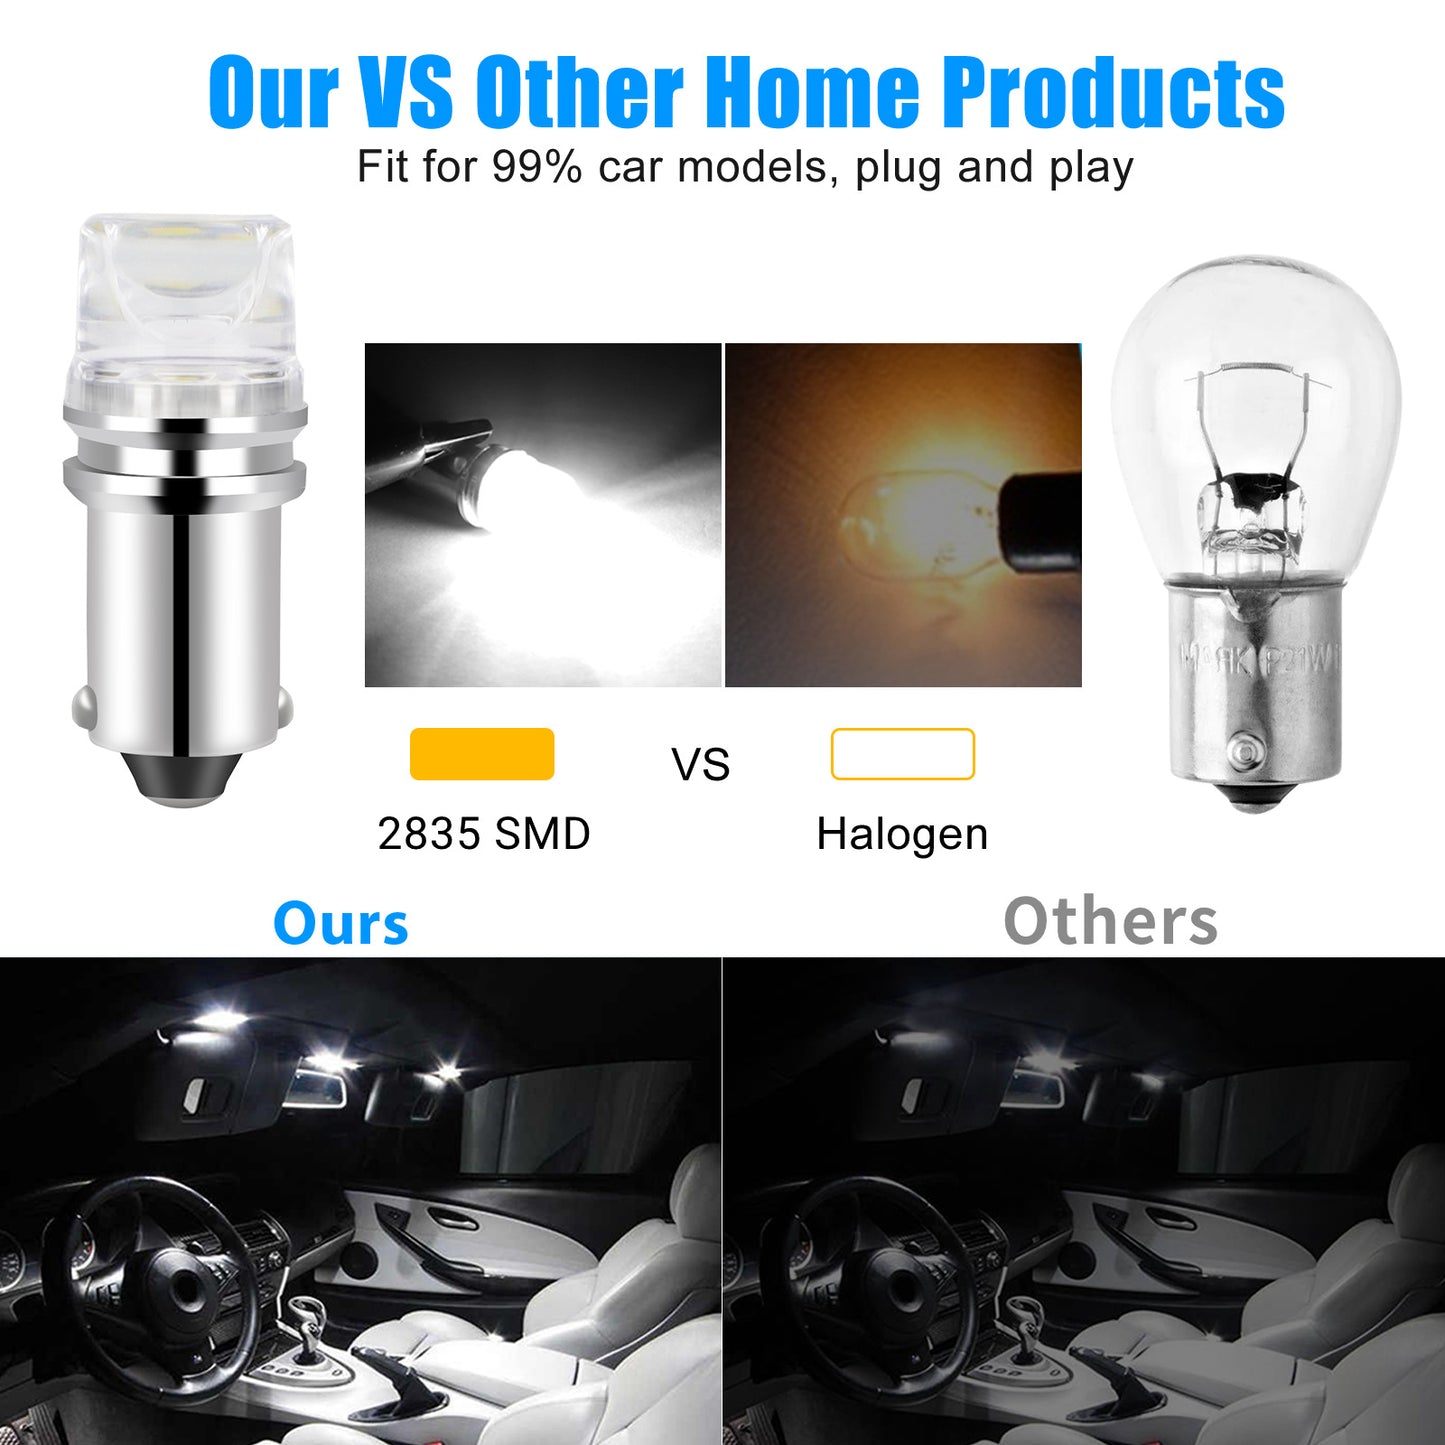 10pcs BA9S LED Car Instrument Panel Interior Light Bulbs - Bright White, Long Lifetime,features 3 high-power 2835 chips